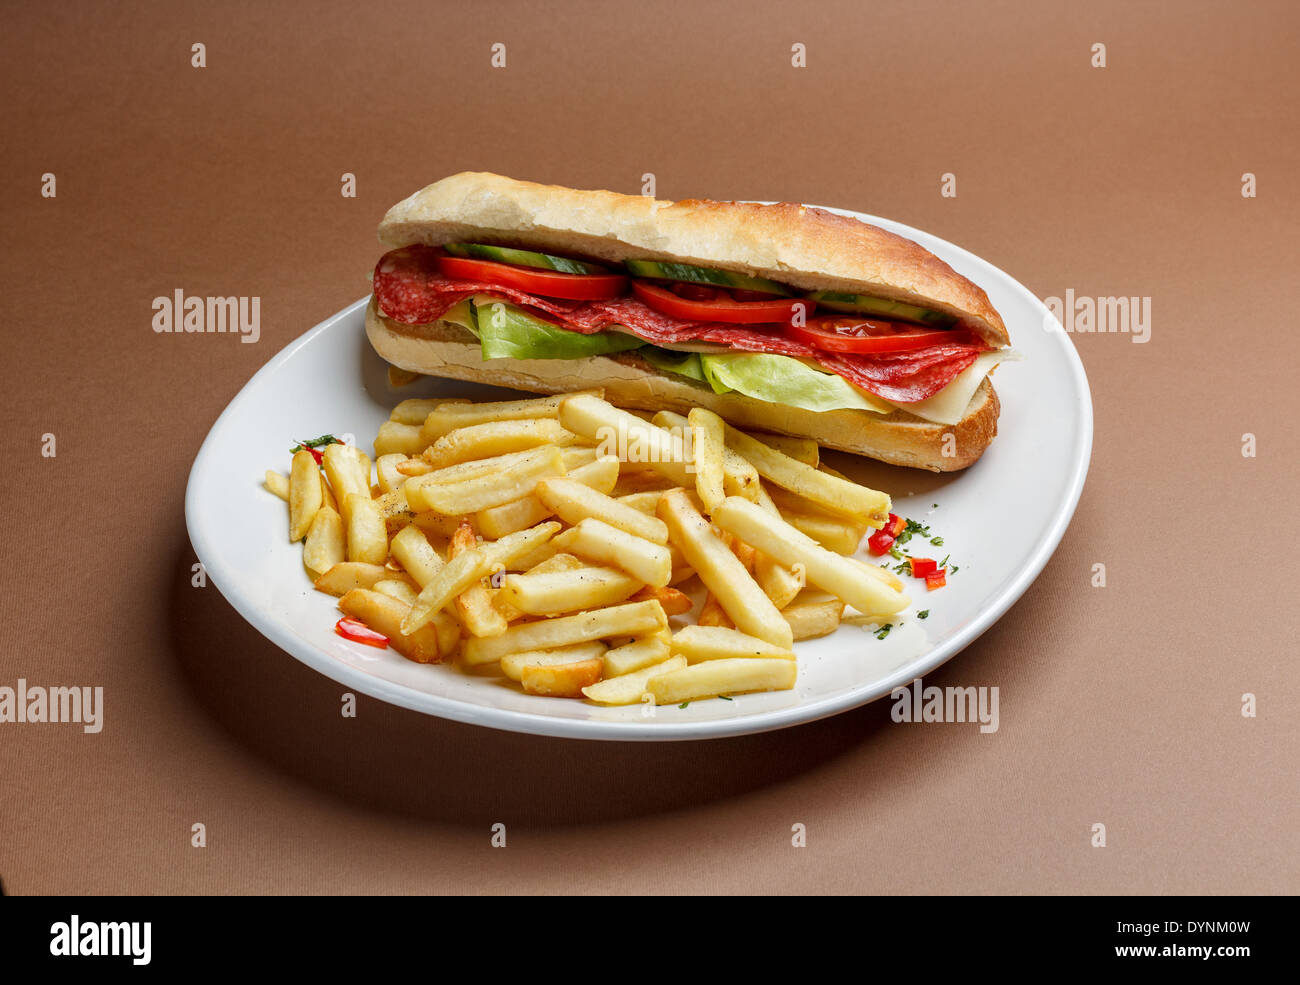 Salame panino con patatine fritte Foto stock - Alamy